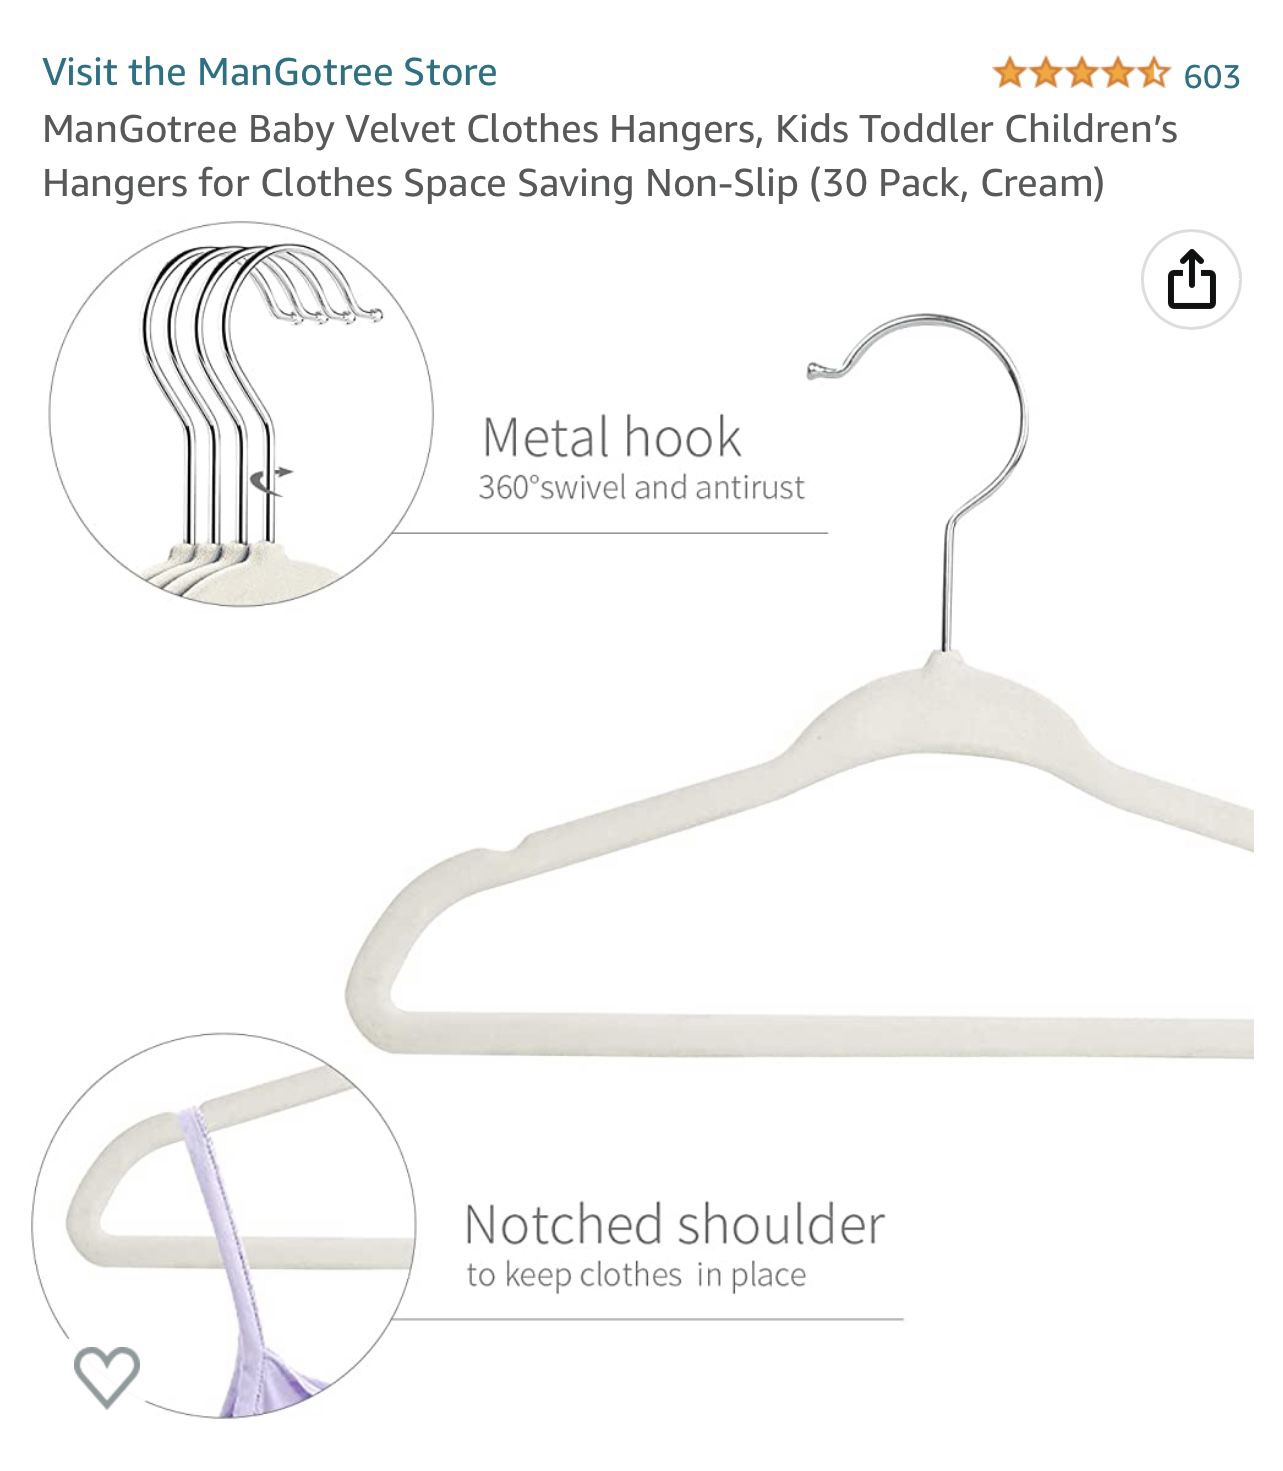 ManGotree Velvet Baby Clothes Hangers, Baby Toddler Kids Hangers with Swivel Hook, Notched Shoulder Design for Kids and Children